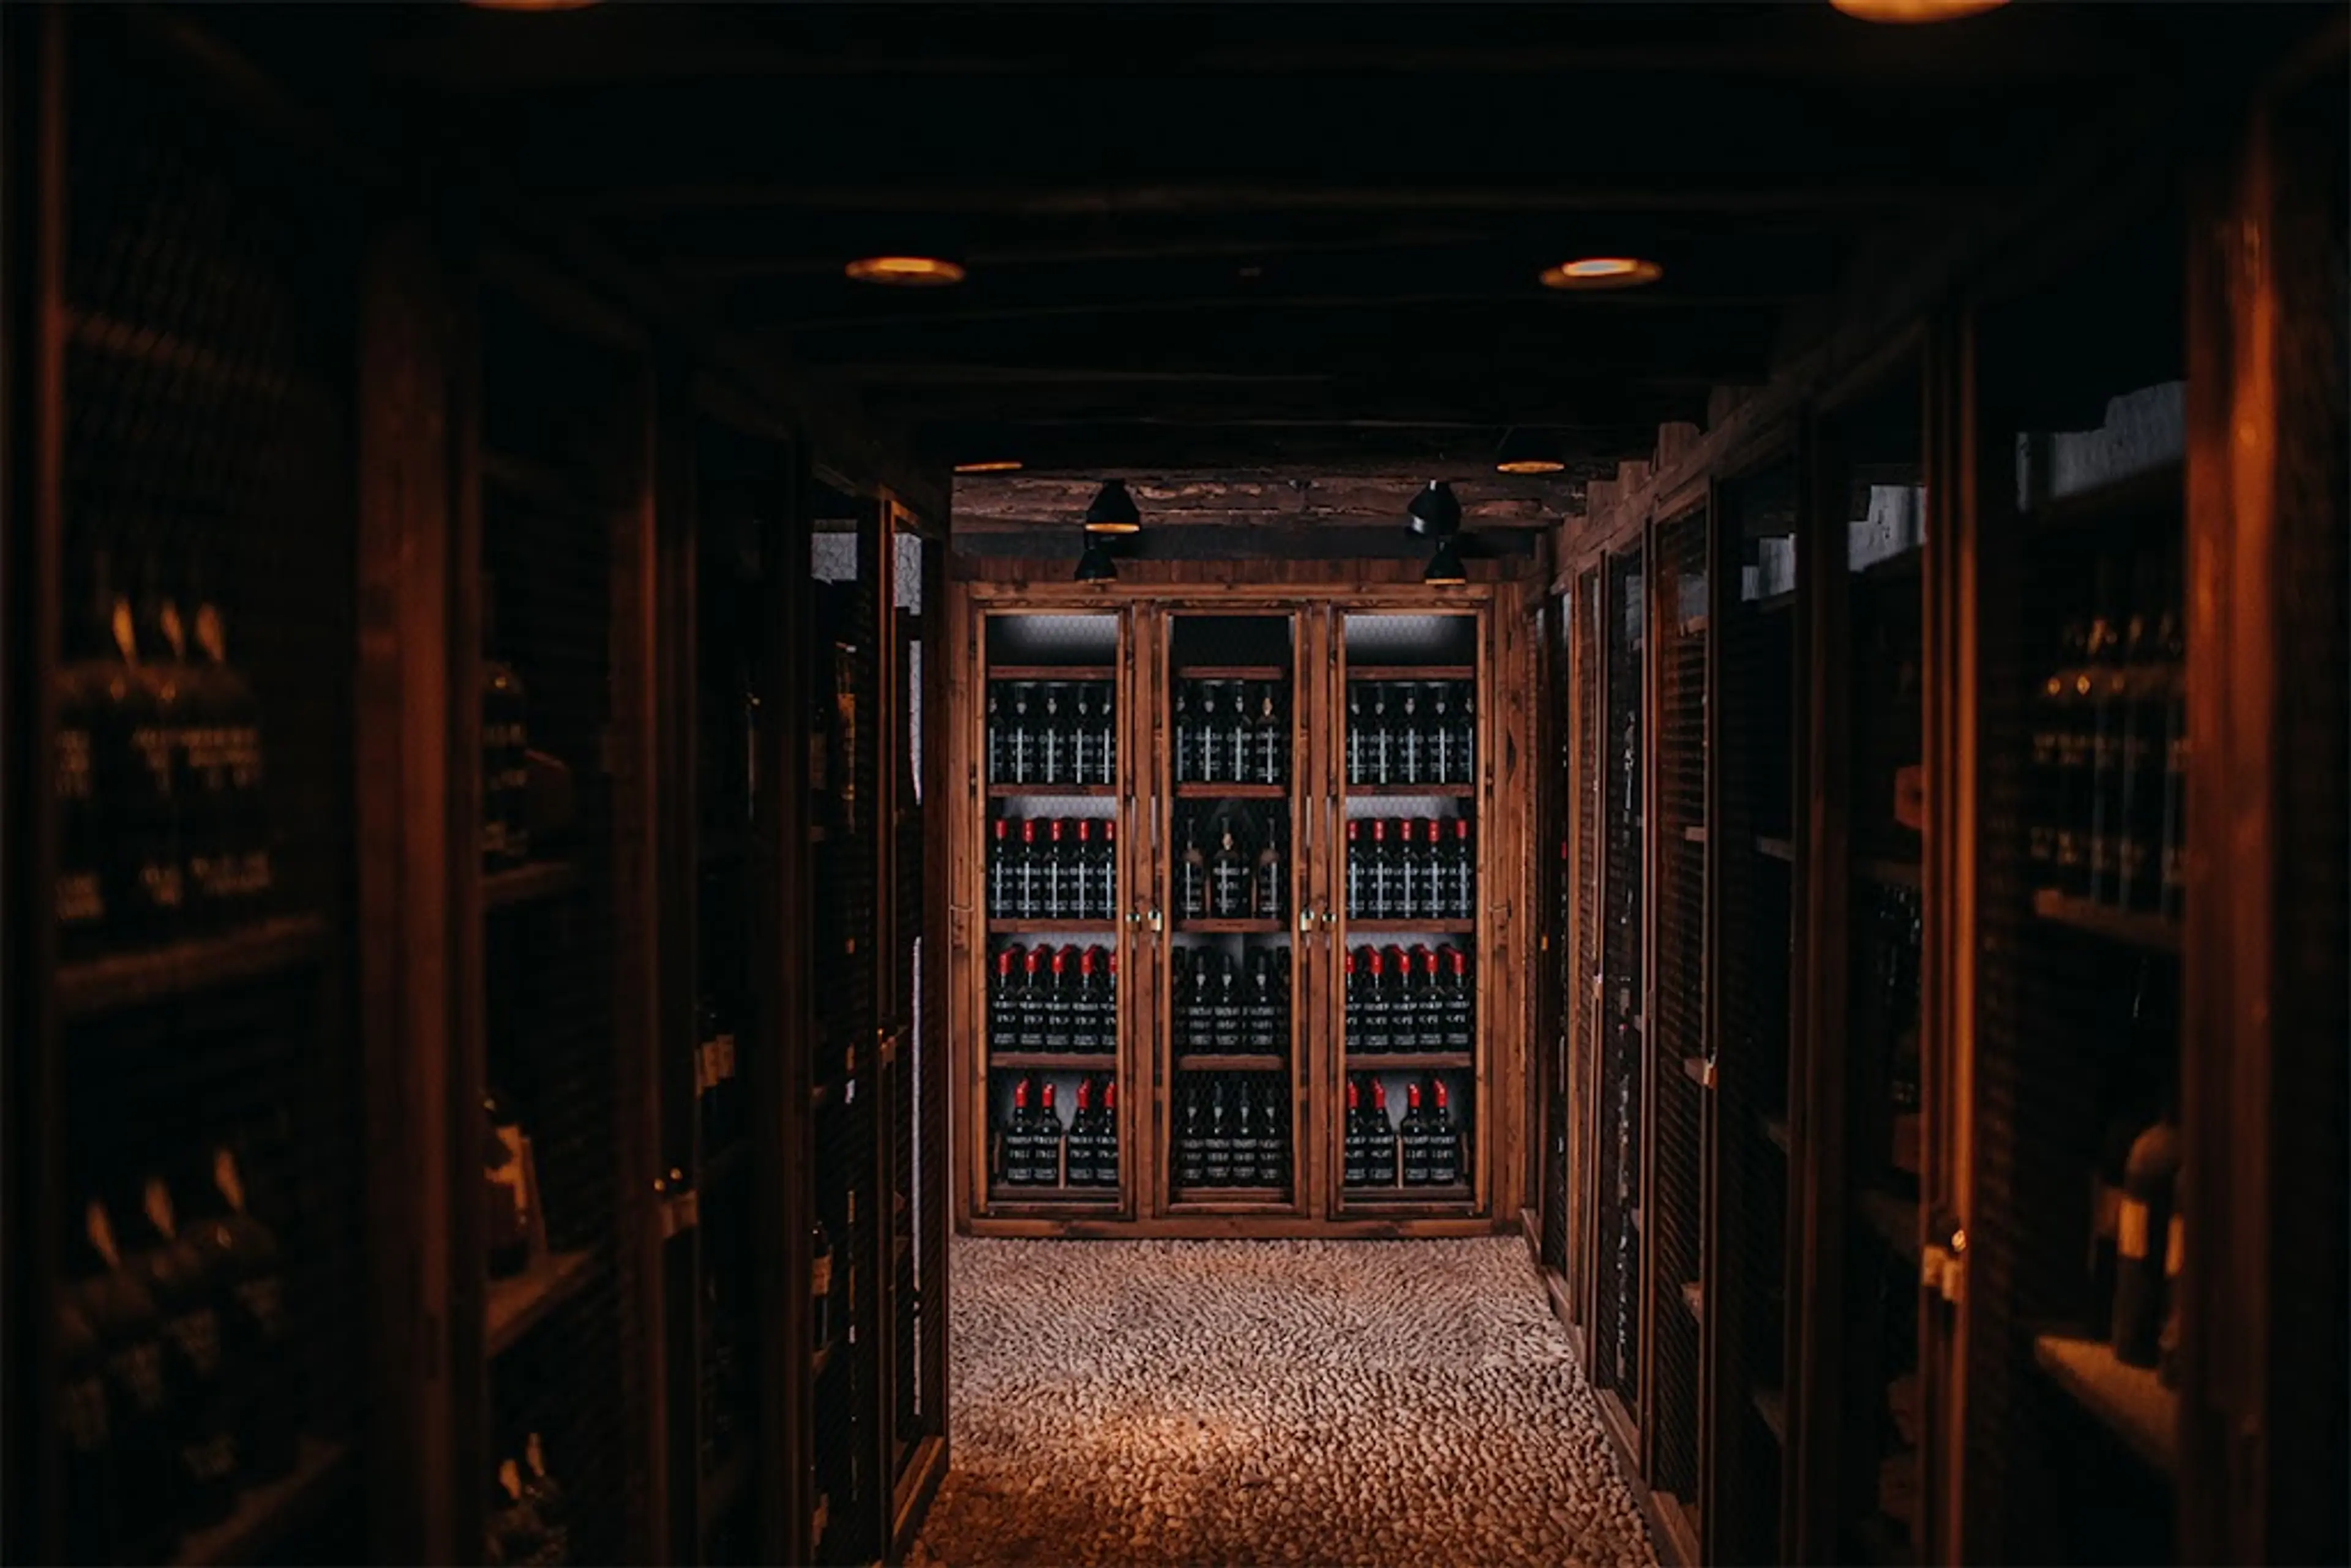 Blandy's Wine Lodge